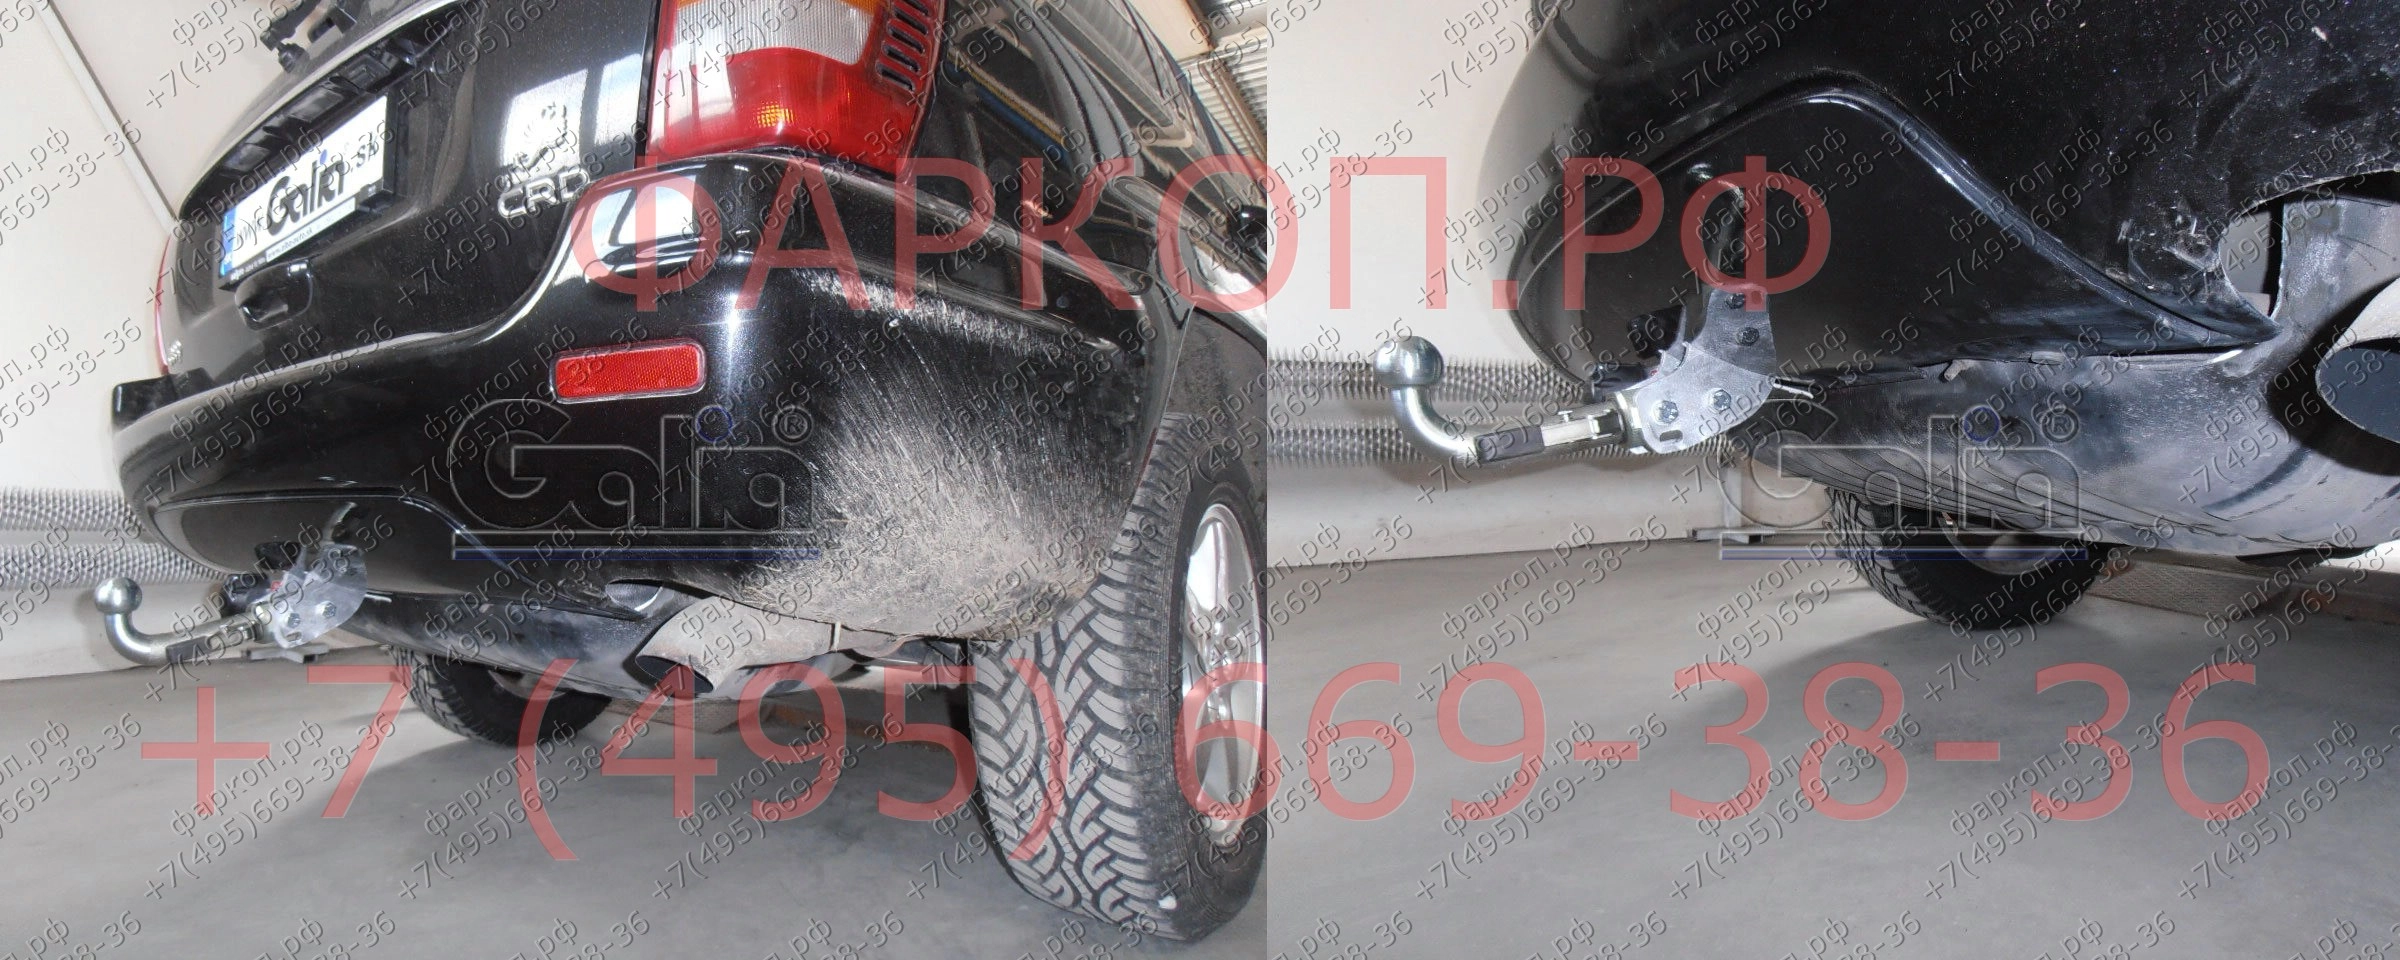 Фаркоп Jeep Grand Cherokee WJ - JP 04 Auto-Hak купить в Москве